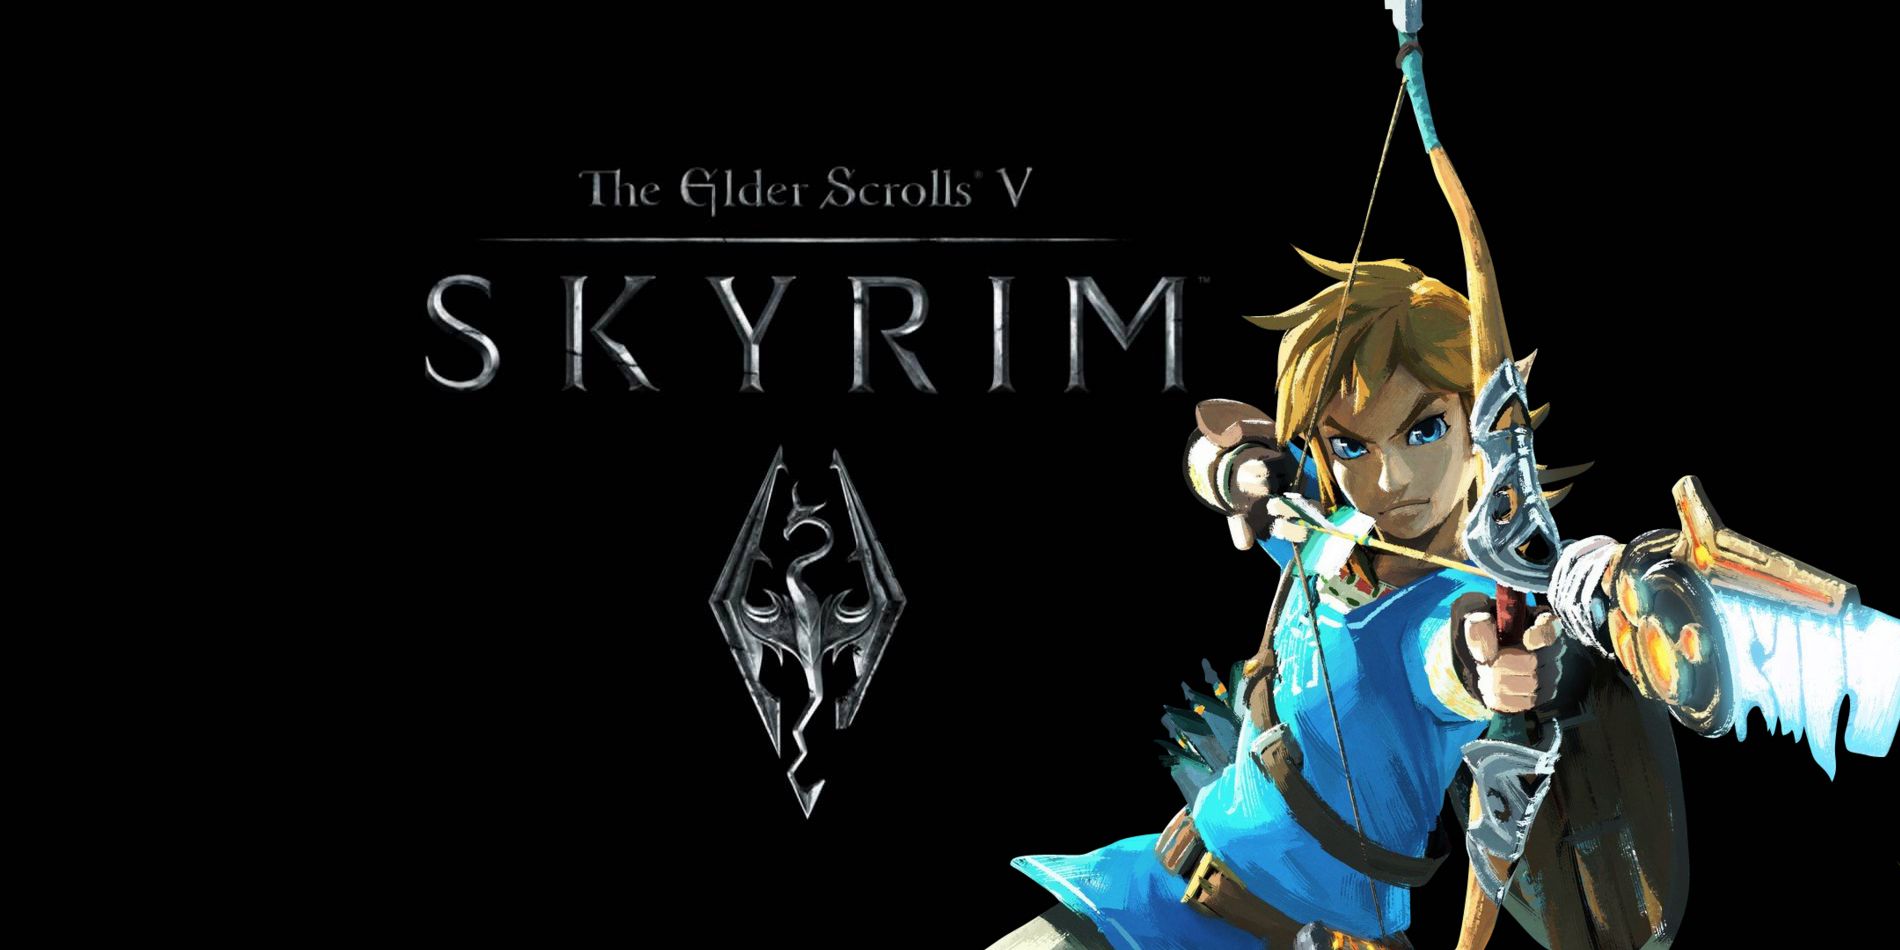 Skyrim Nintendo Switch Trailer: Zelda Gear And Amiibos